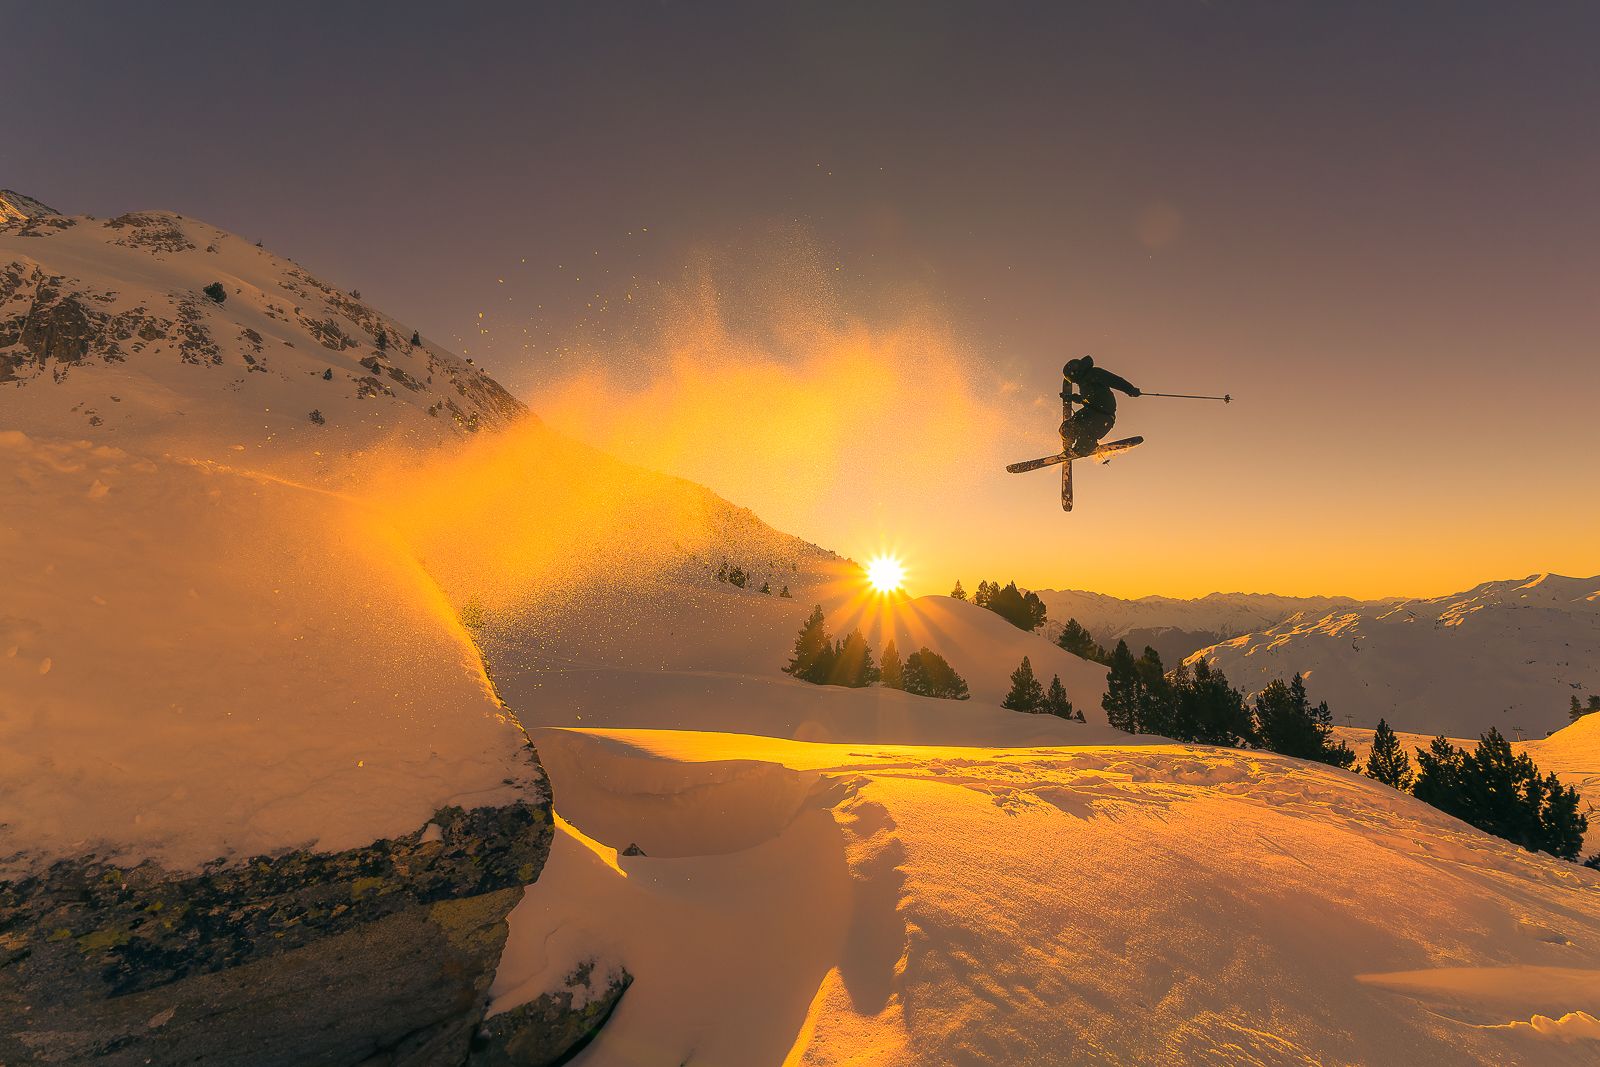 Premio ganador para esta preciosa imagen de un salto de esquí en Baqueira Beret